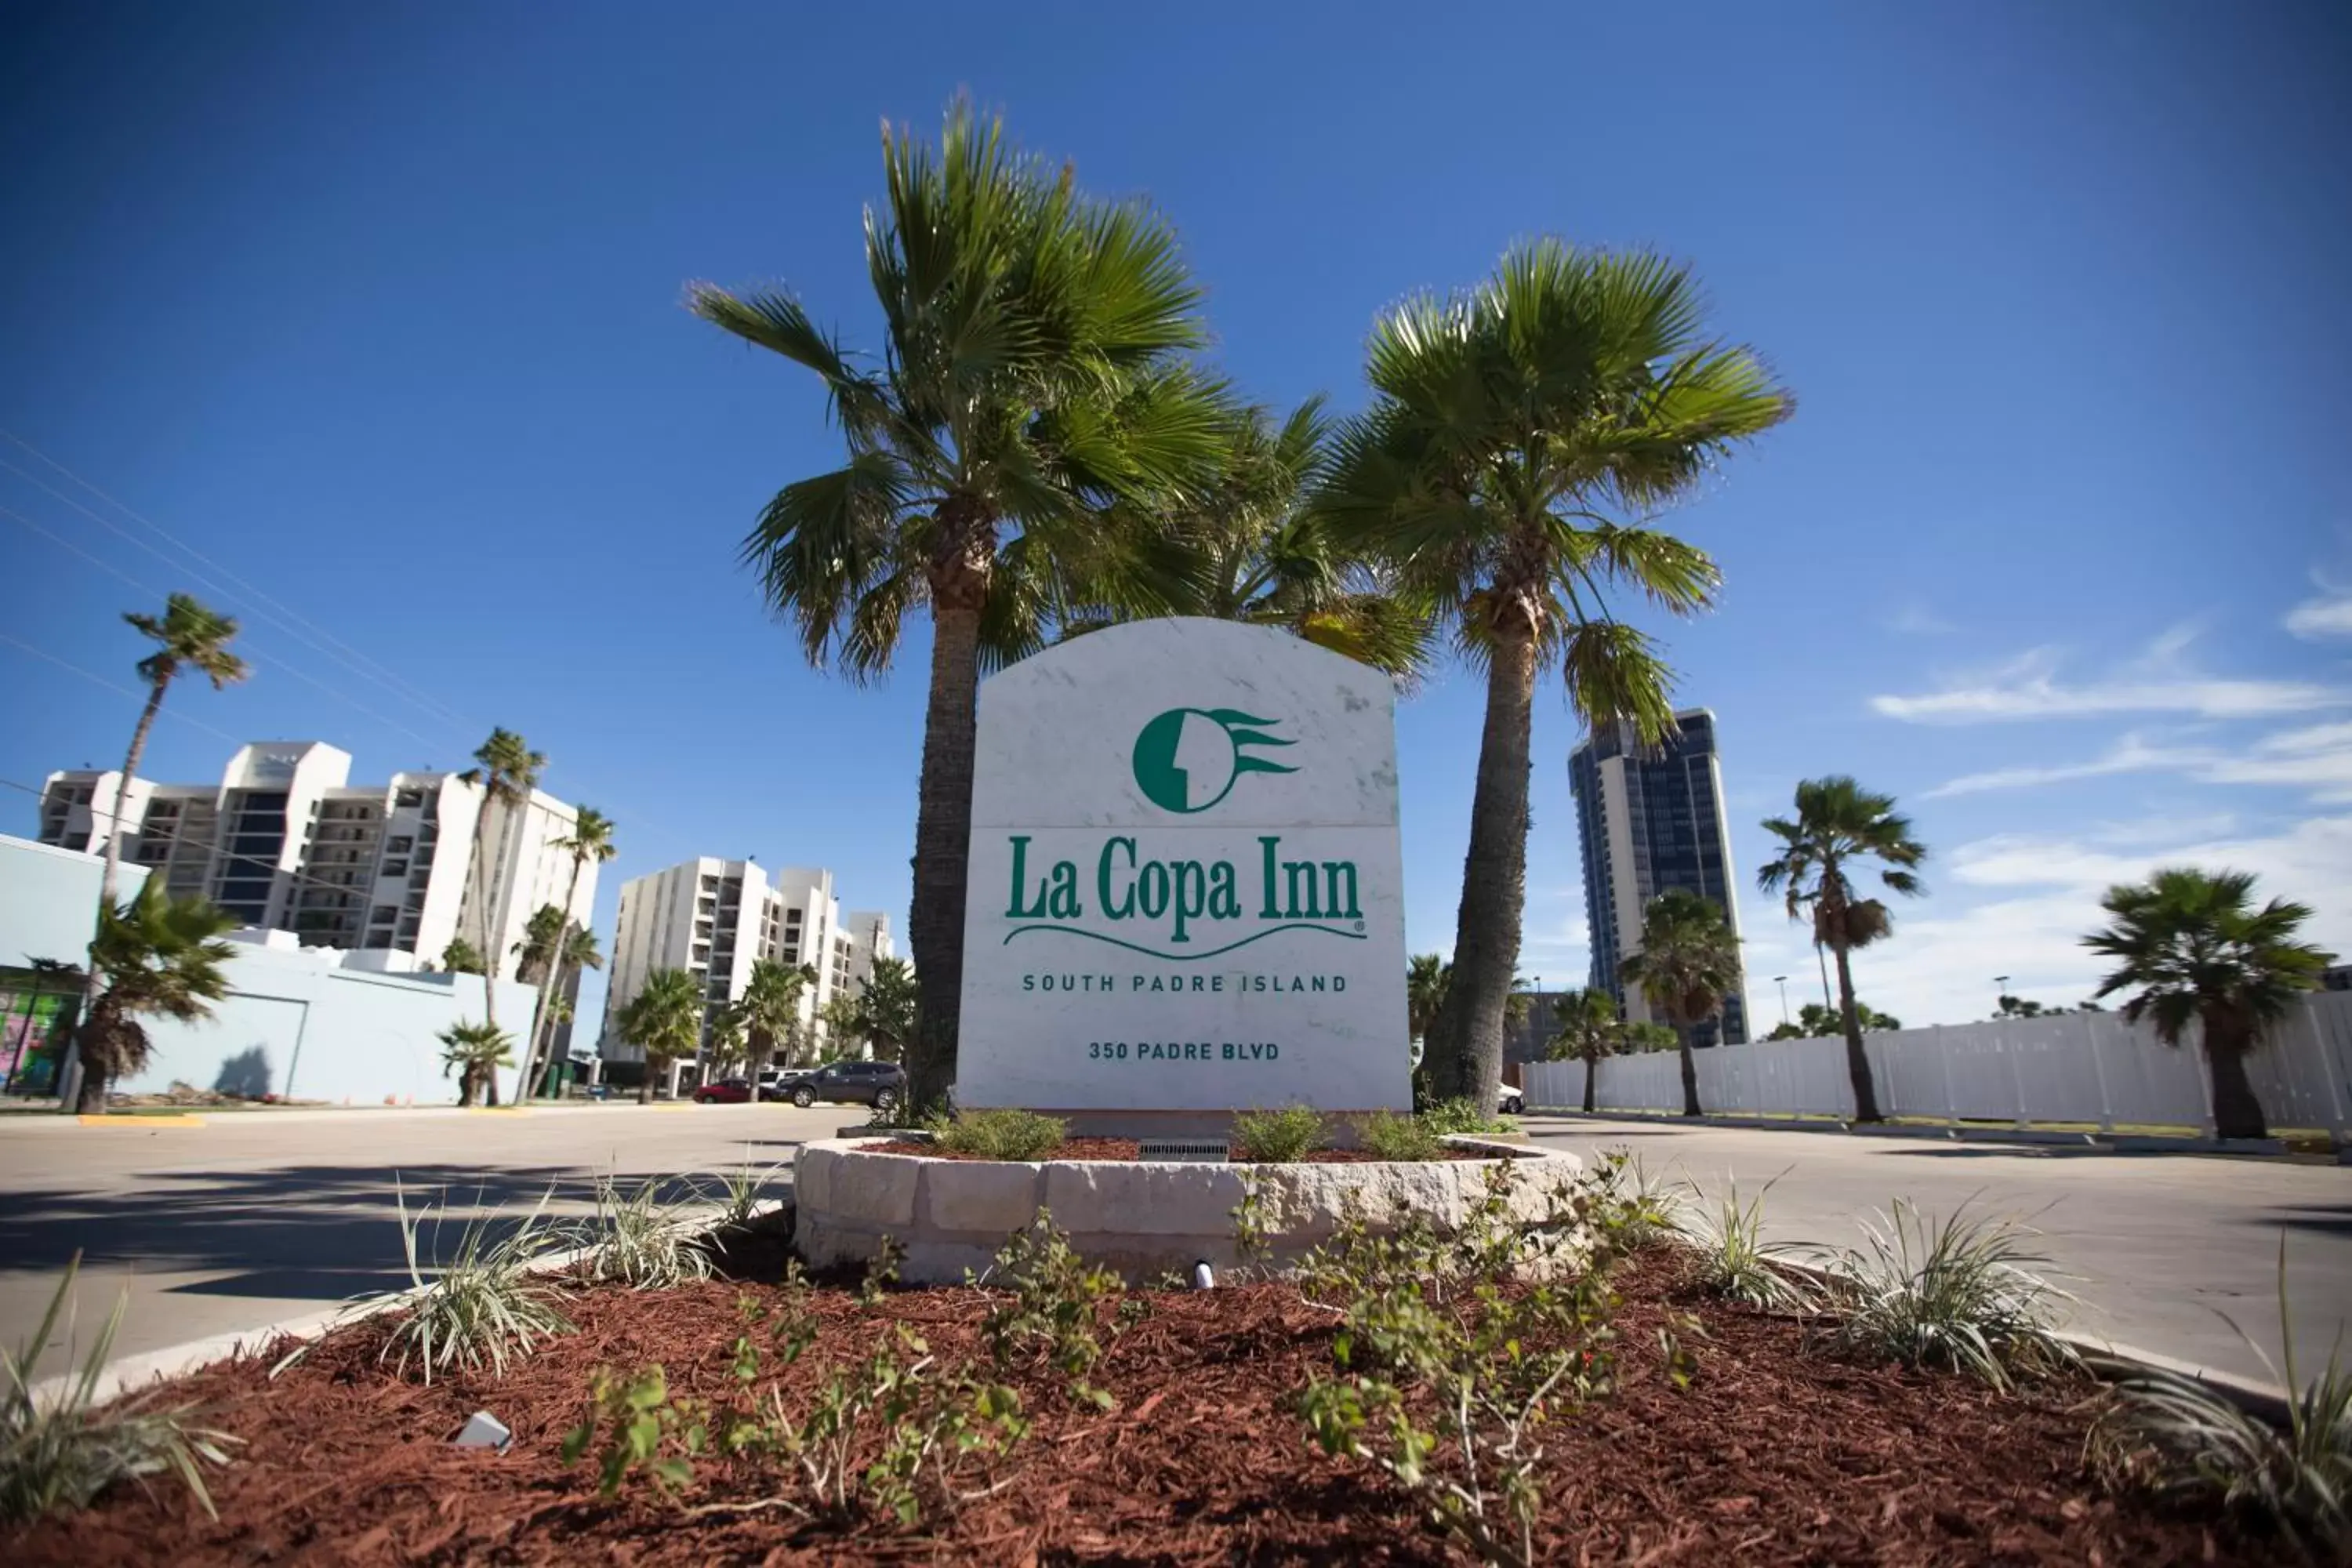 Property logo or sign in La Copa Inn Beach Hotel